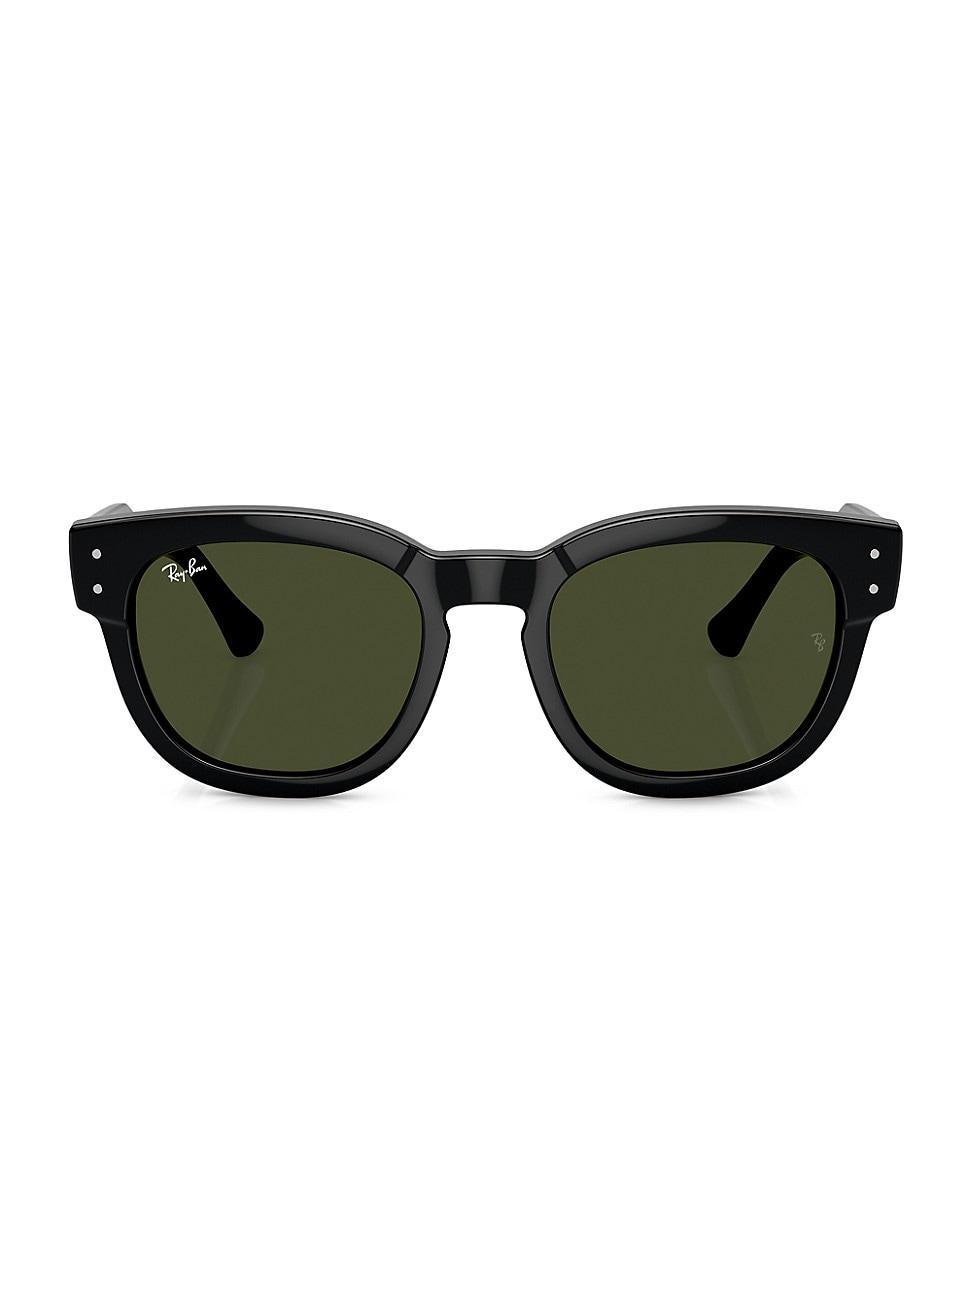 Longchamp 55mm Rectangular Sunglasses Product Image